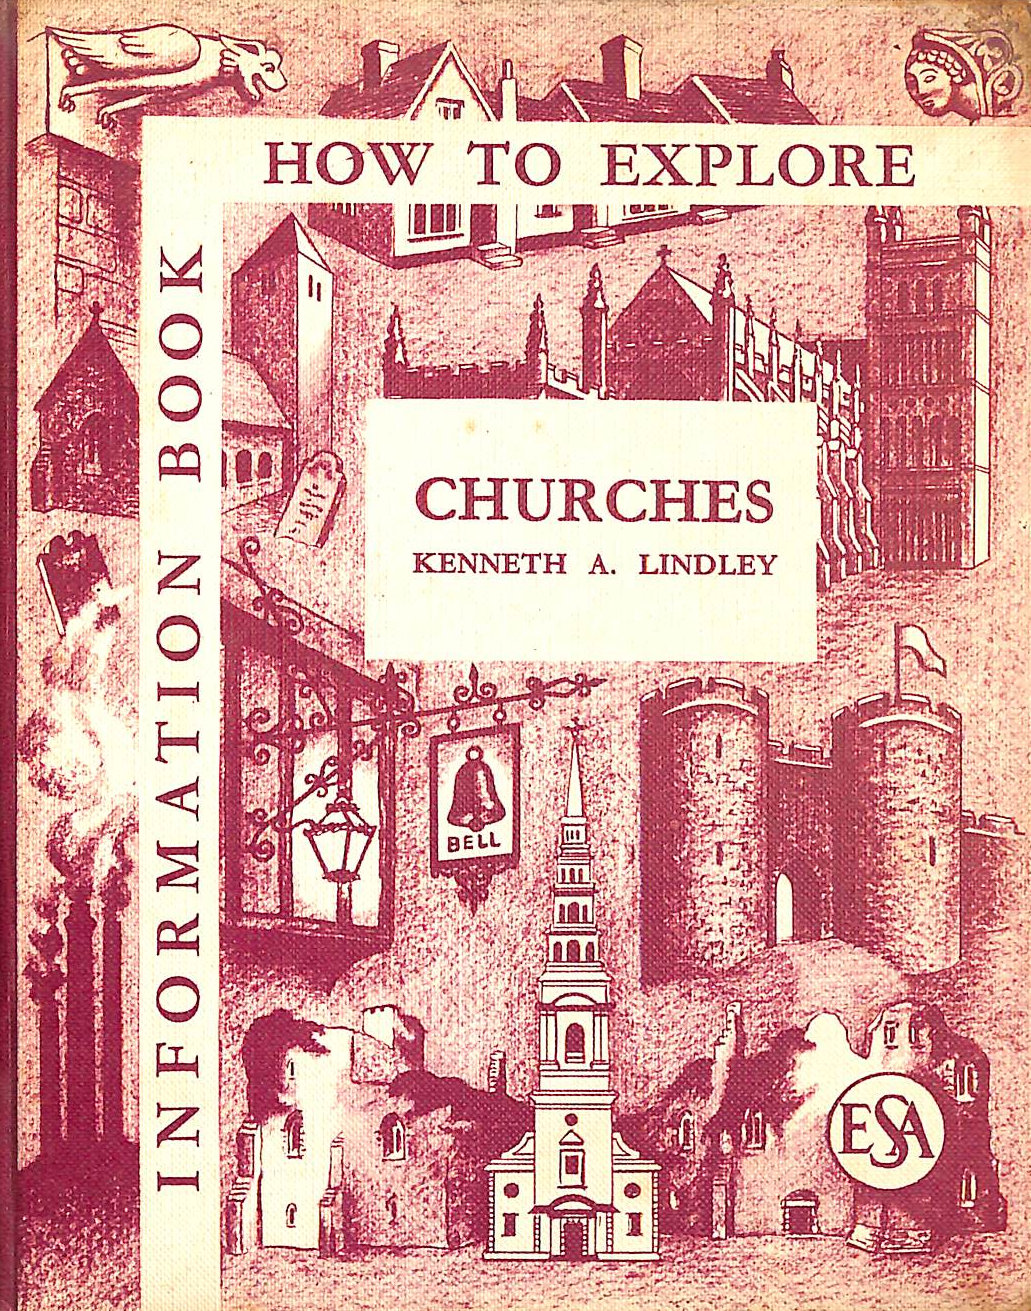 KA LINDLEY - How to Explore Churches